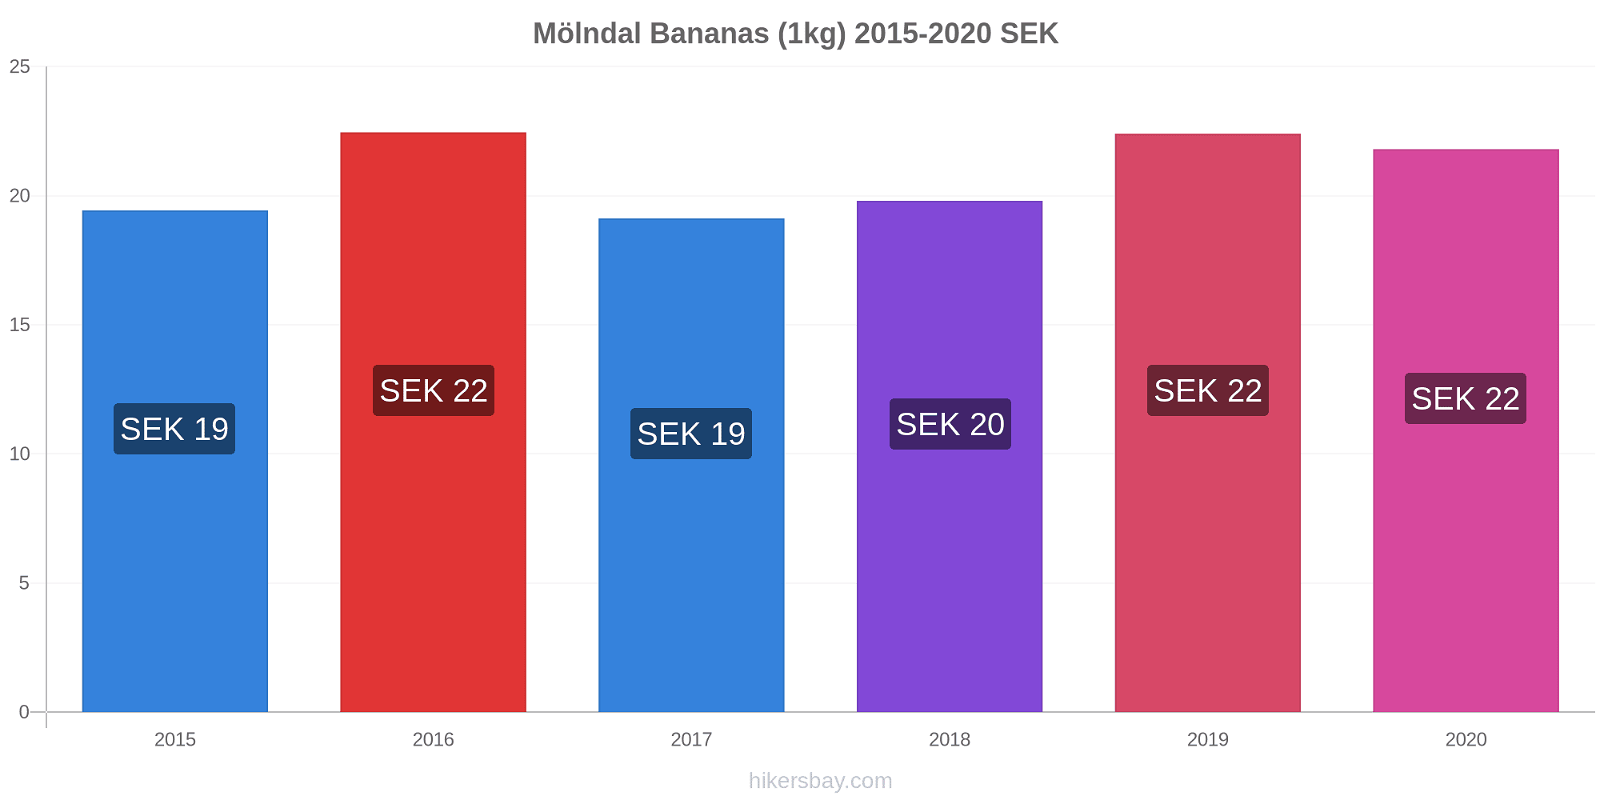 Mölndal price changes Bananas (1kg) hikersbay.com